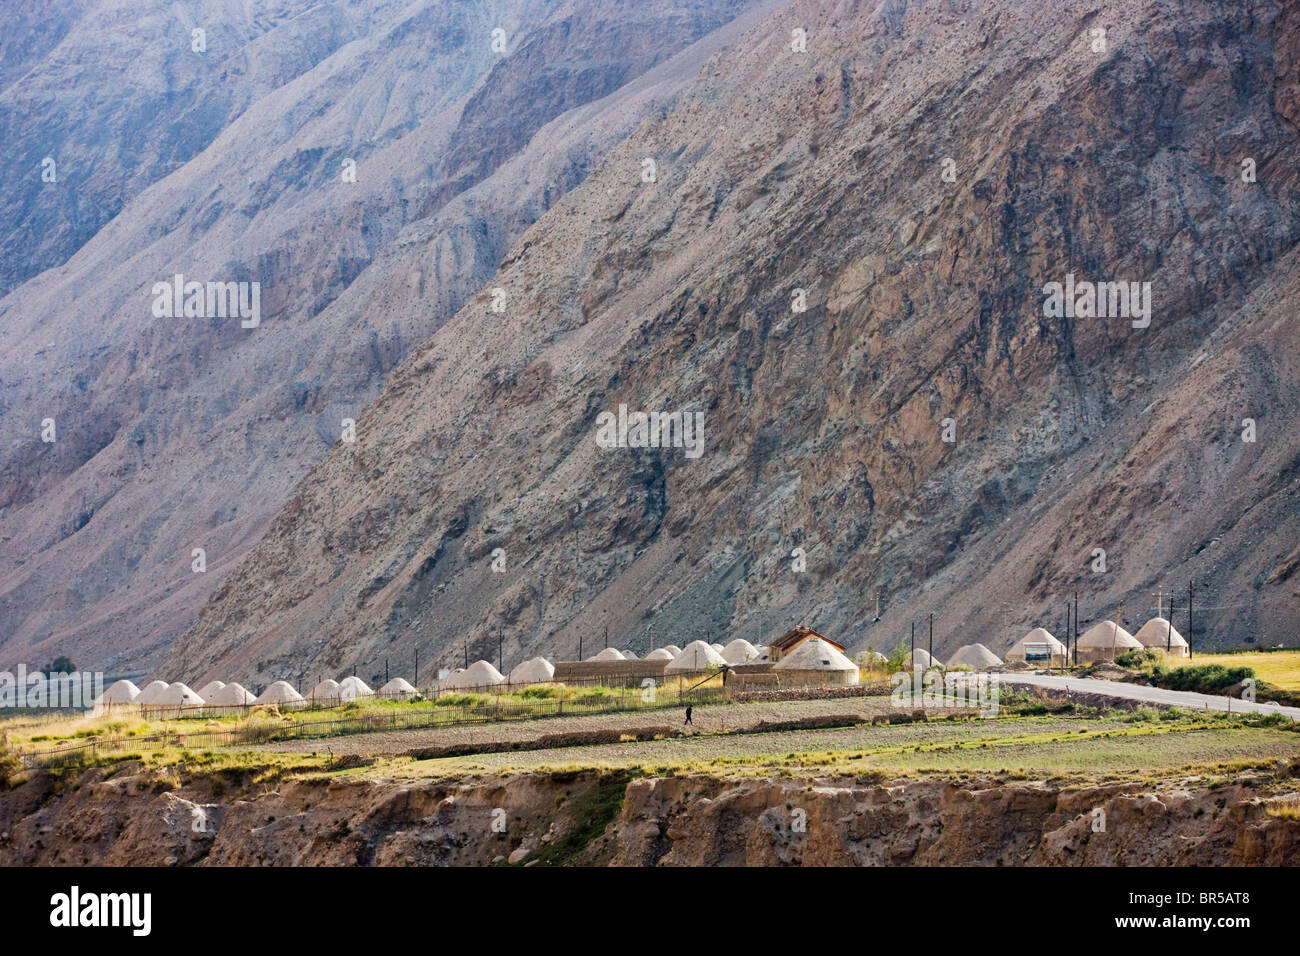 Yurts in Aoyitage Valley, Pamir Plateau, Xinjiang, China Stock Photo